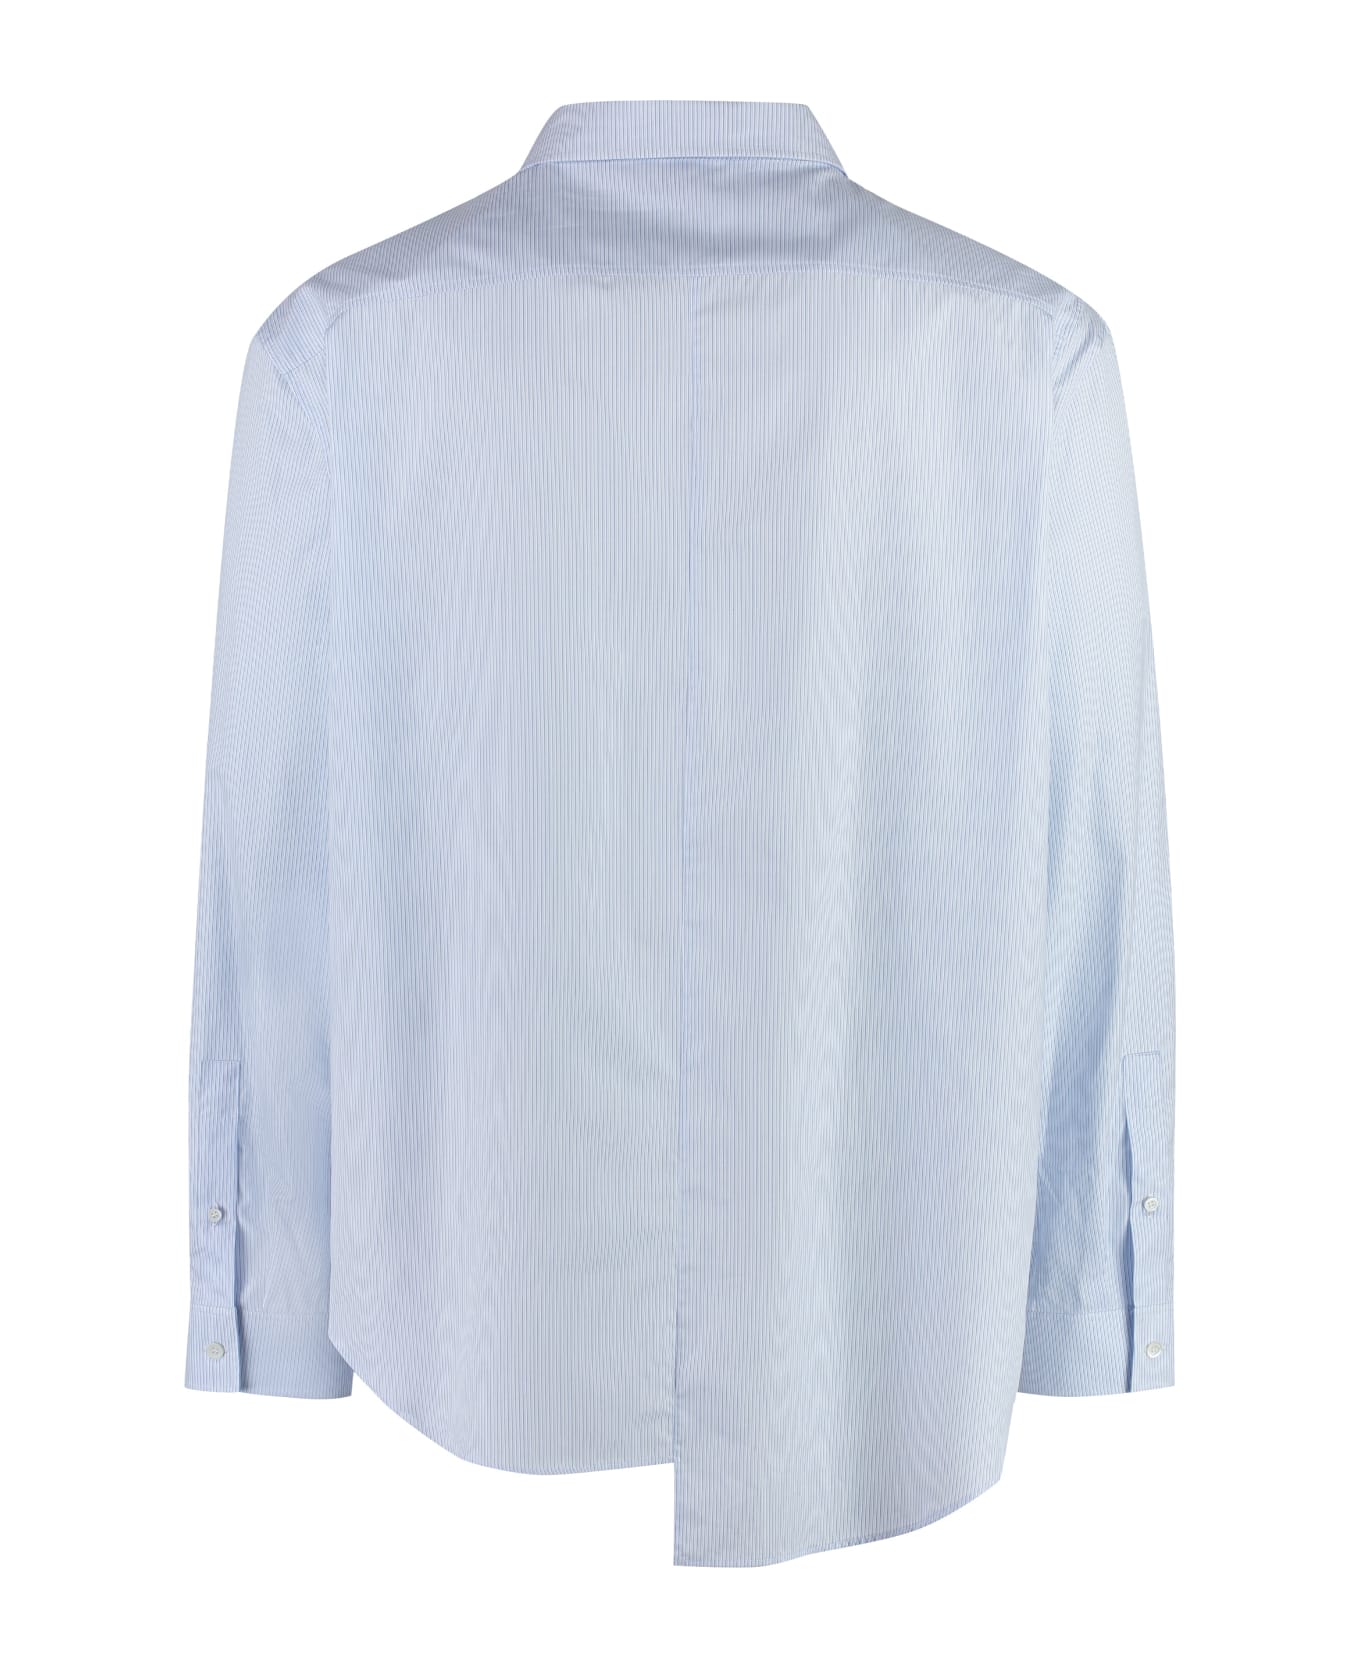 Loewe Striped Cotton Shirt - Light Blue